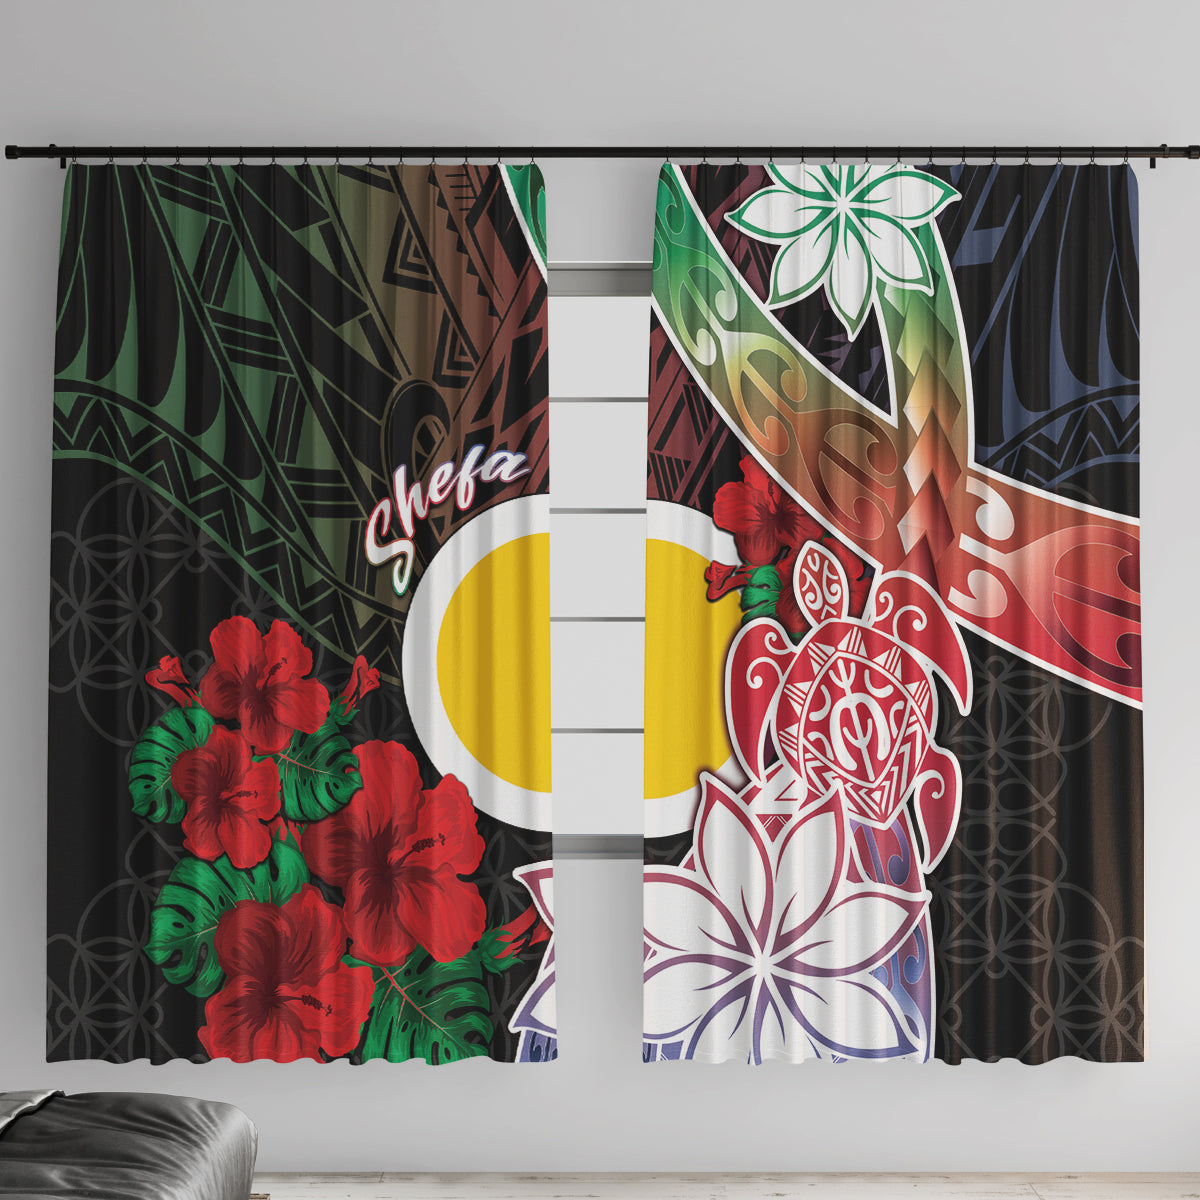 Vanuatu Shefa Day Window Curtain Floral Pattern